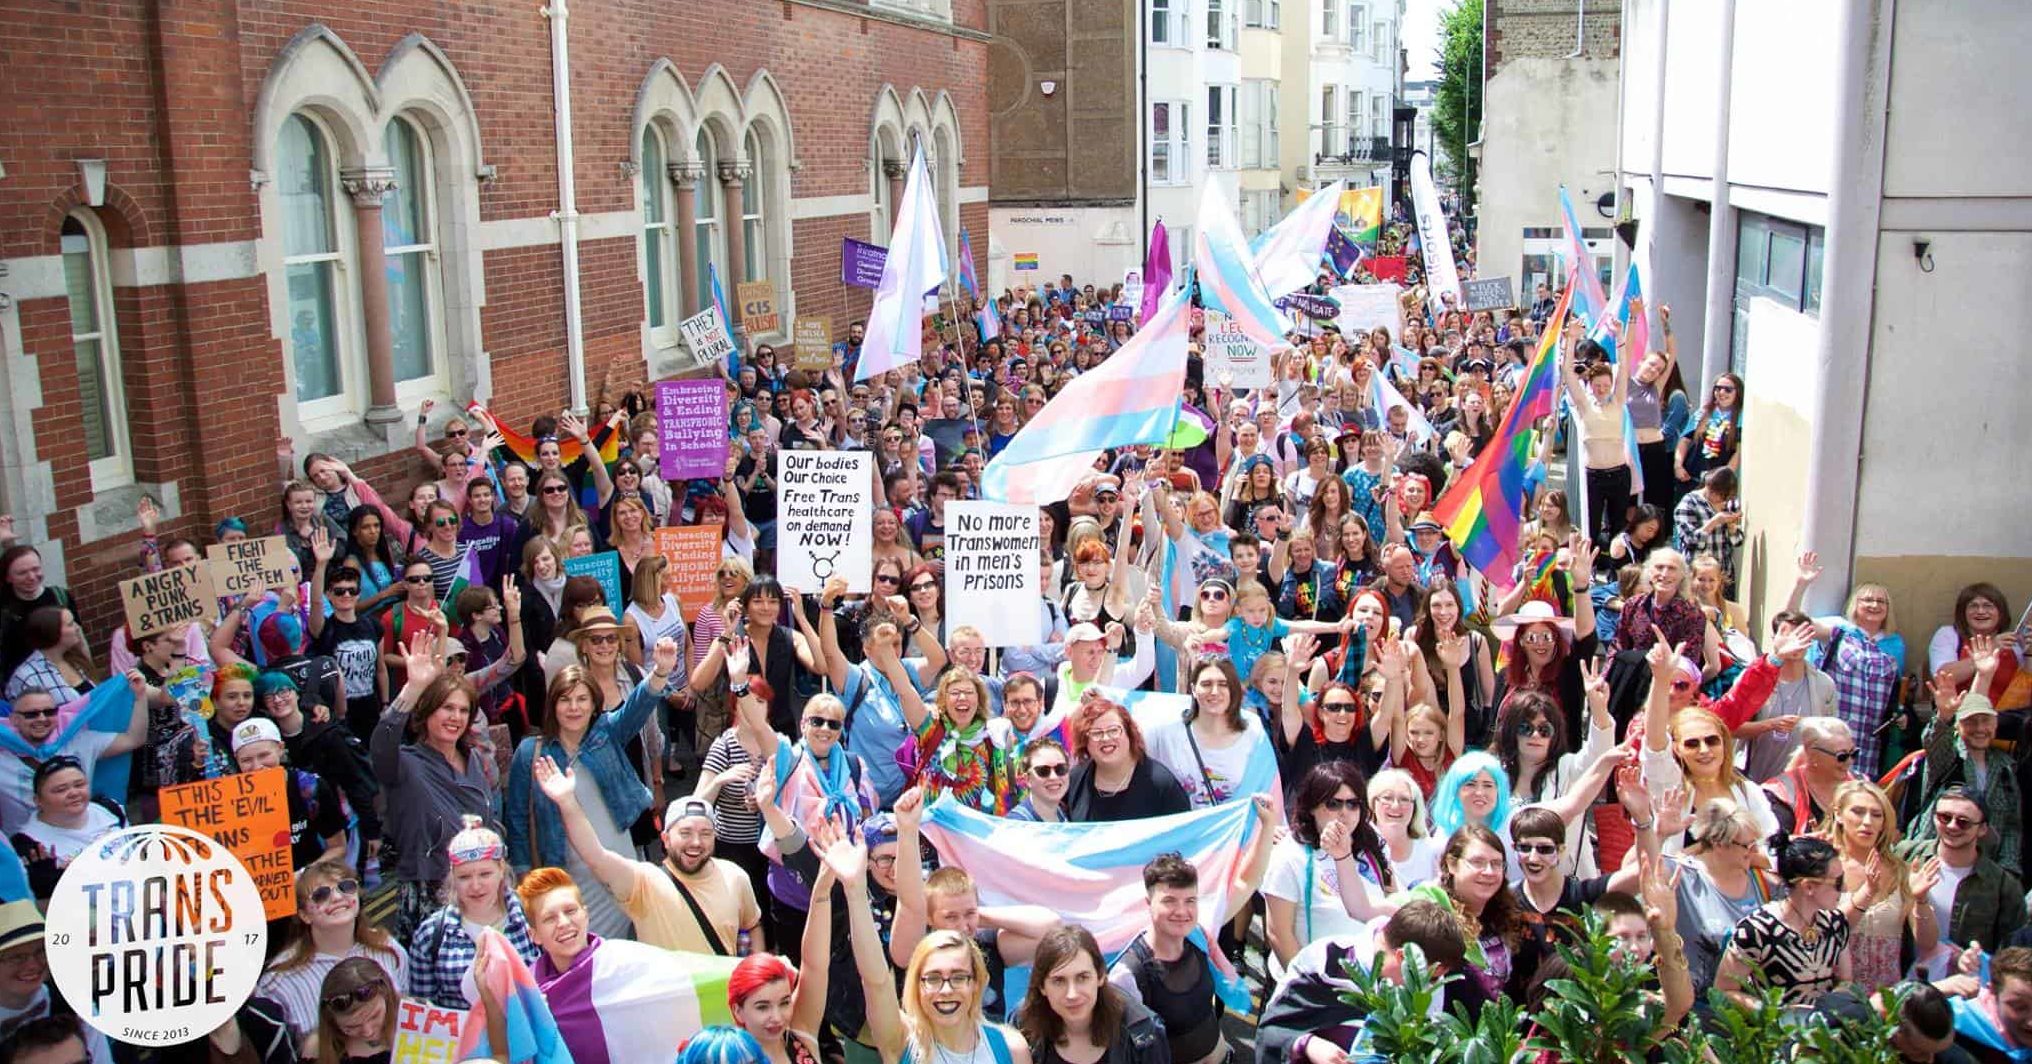 Trans Pride Brighton